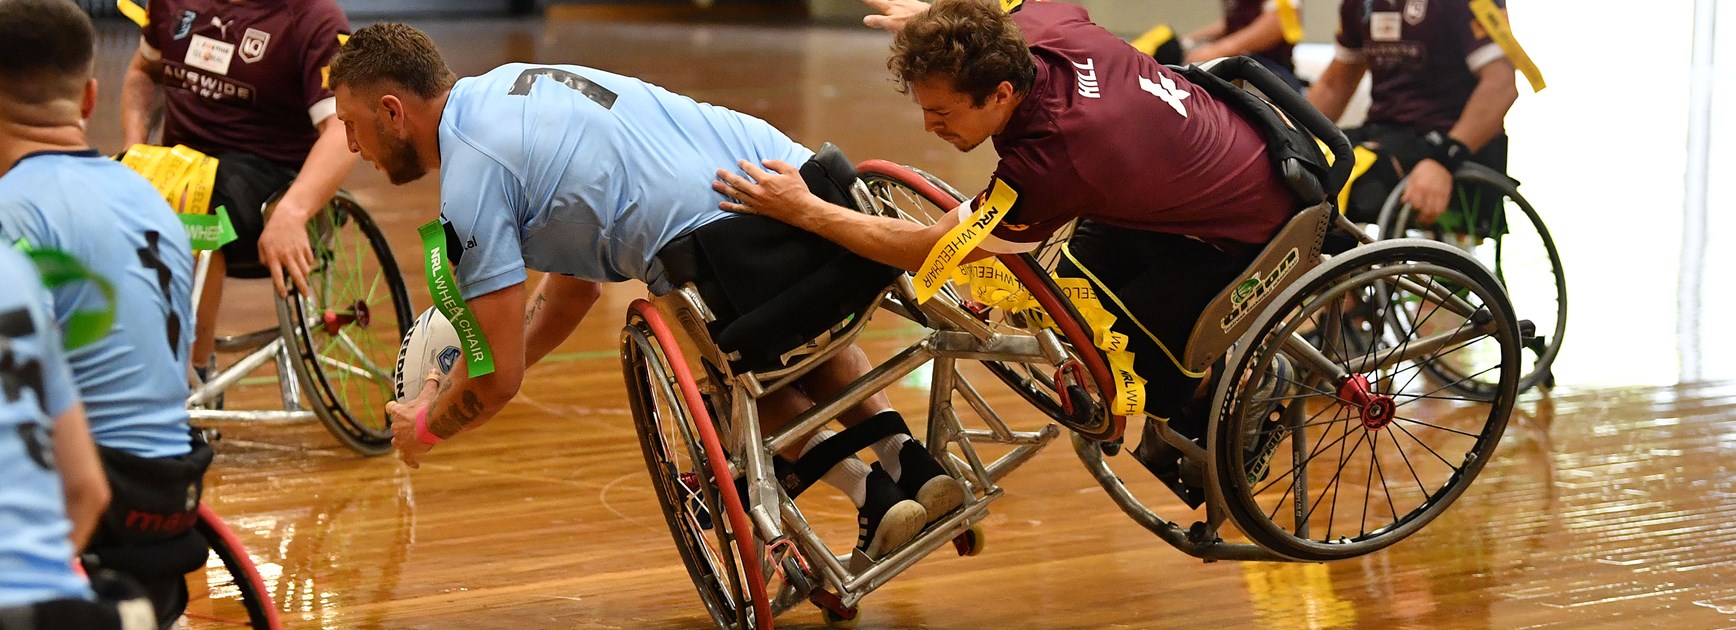 NSW Wheelchair Rugby League team ready for Origin firestorm